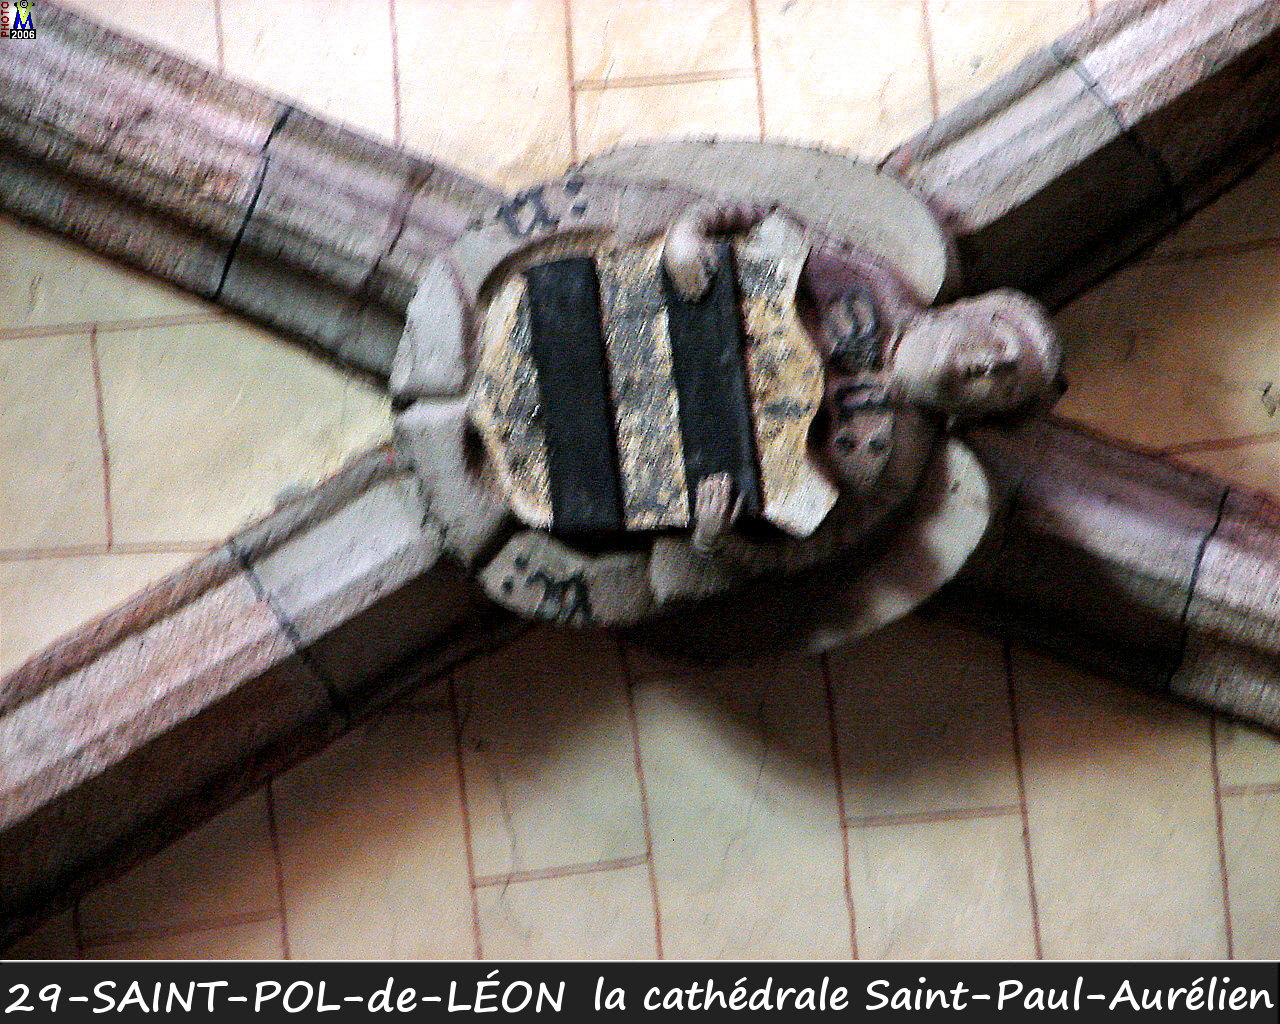 29St-POL-LEON_cathedrale_216.jpg